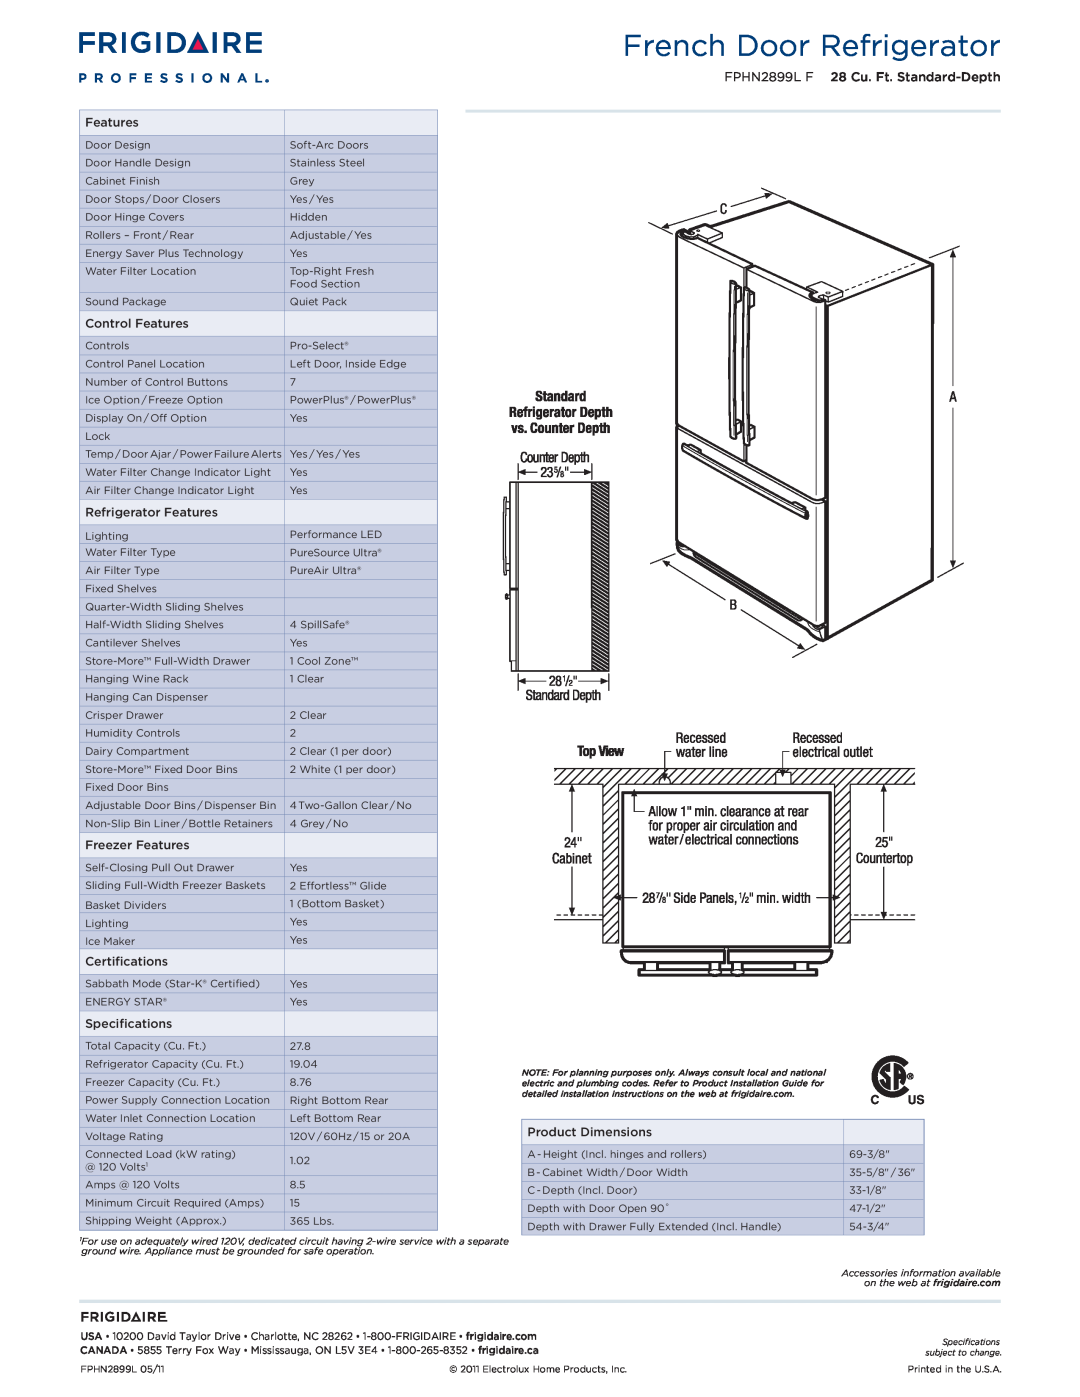 Frigidaire FPHN2899LF dimensions French Door Refrigerator, FPHN2899L F 28 Cu. Ft. Standard-Depth 